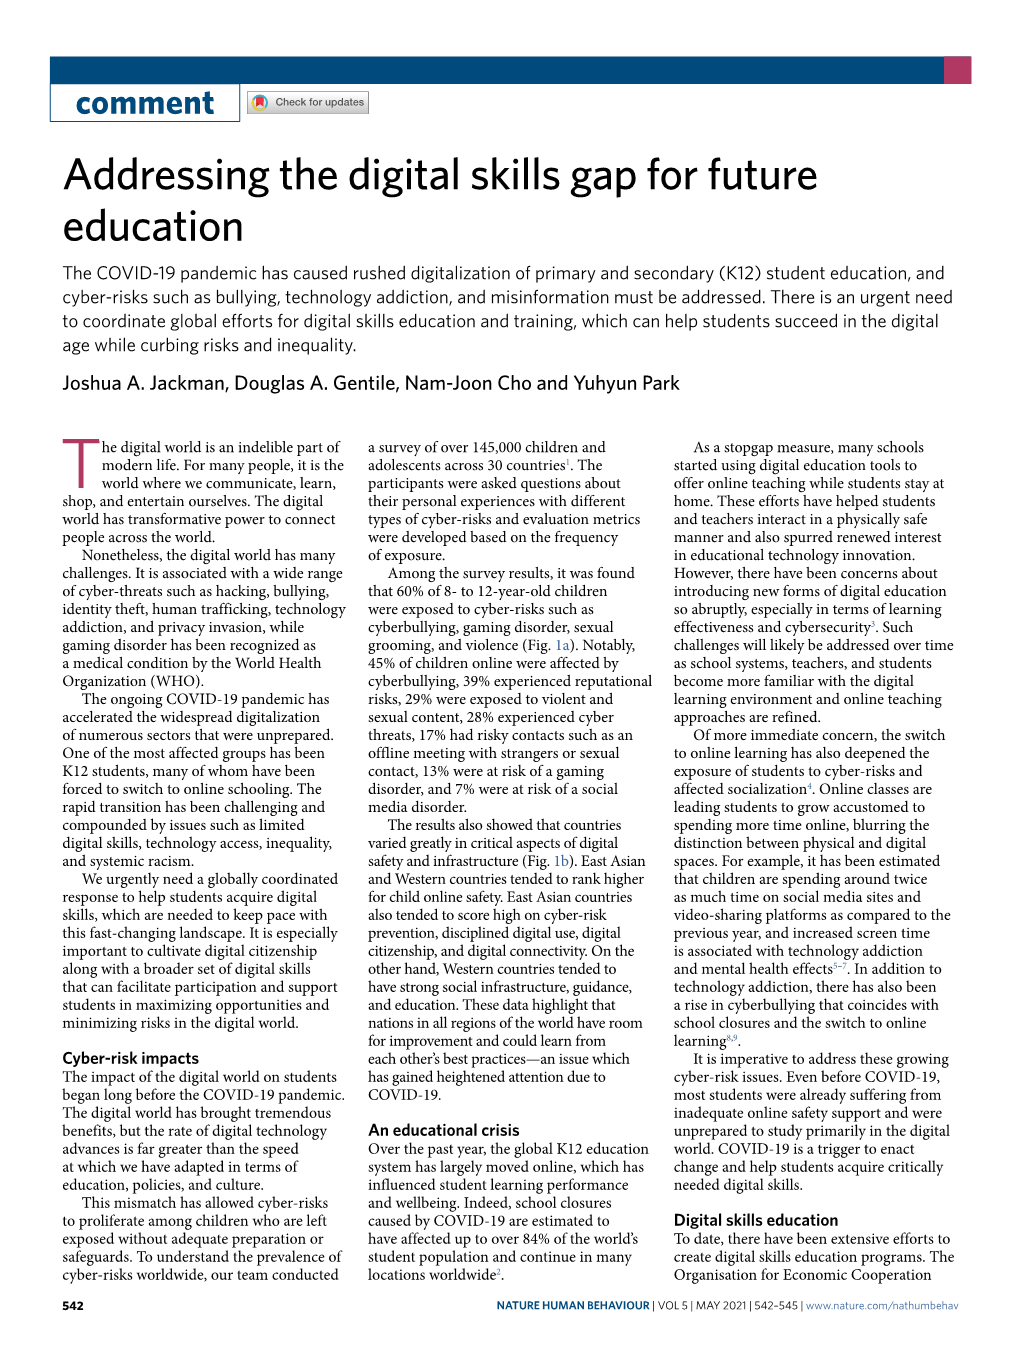 Addressing the Digital Skills Gap for Future Education